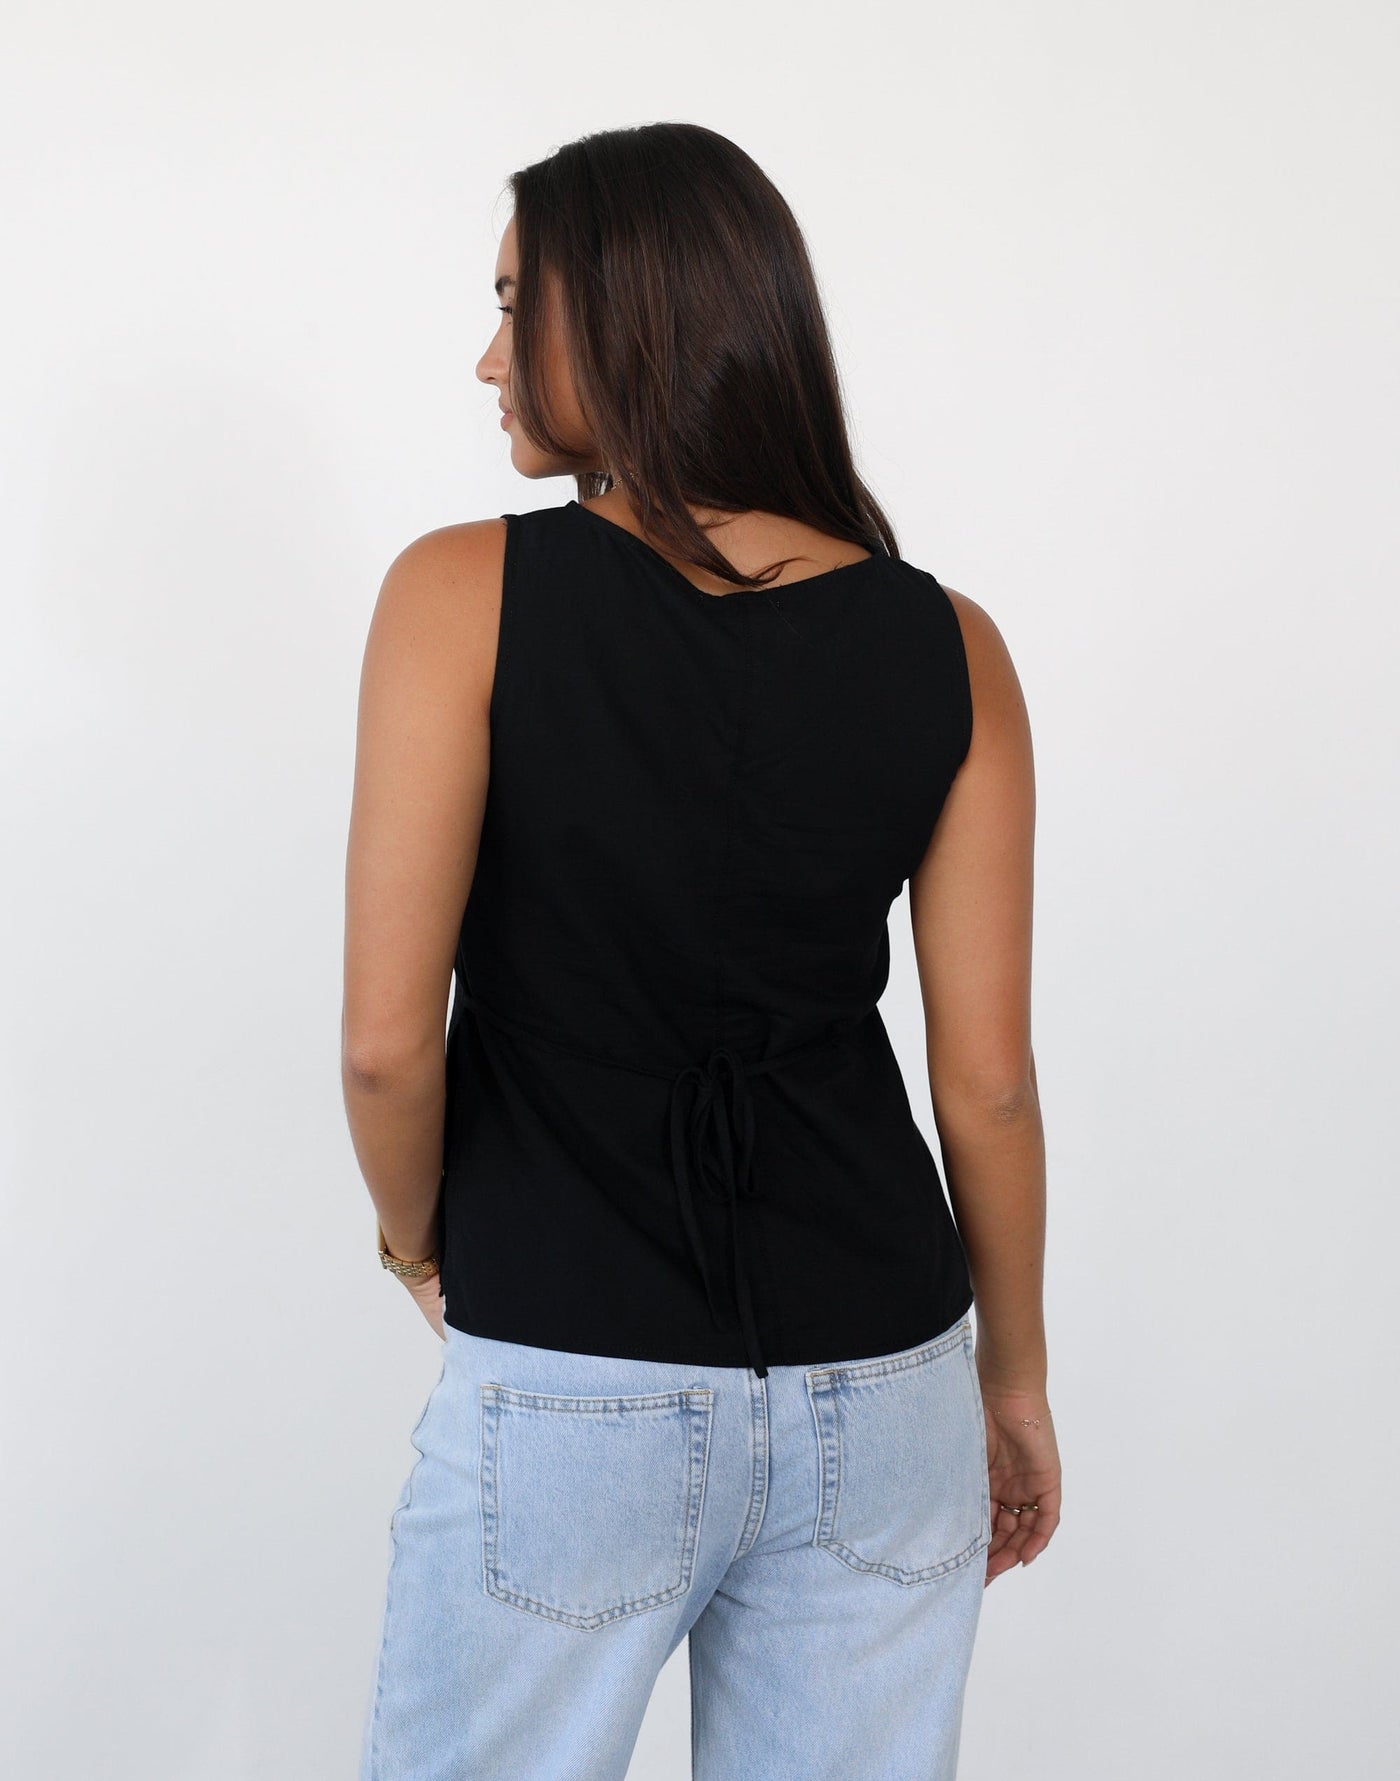 Lestari Top (Black) - Linen Blend Top - Women's Top - Charcoal Clothing